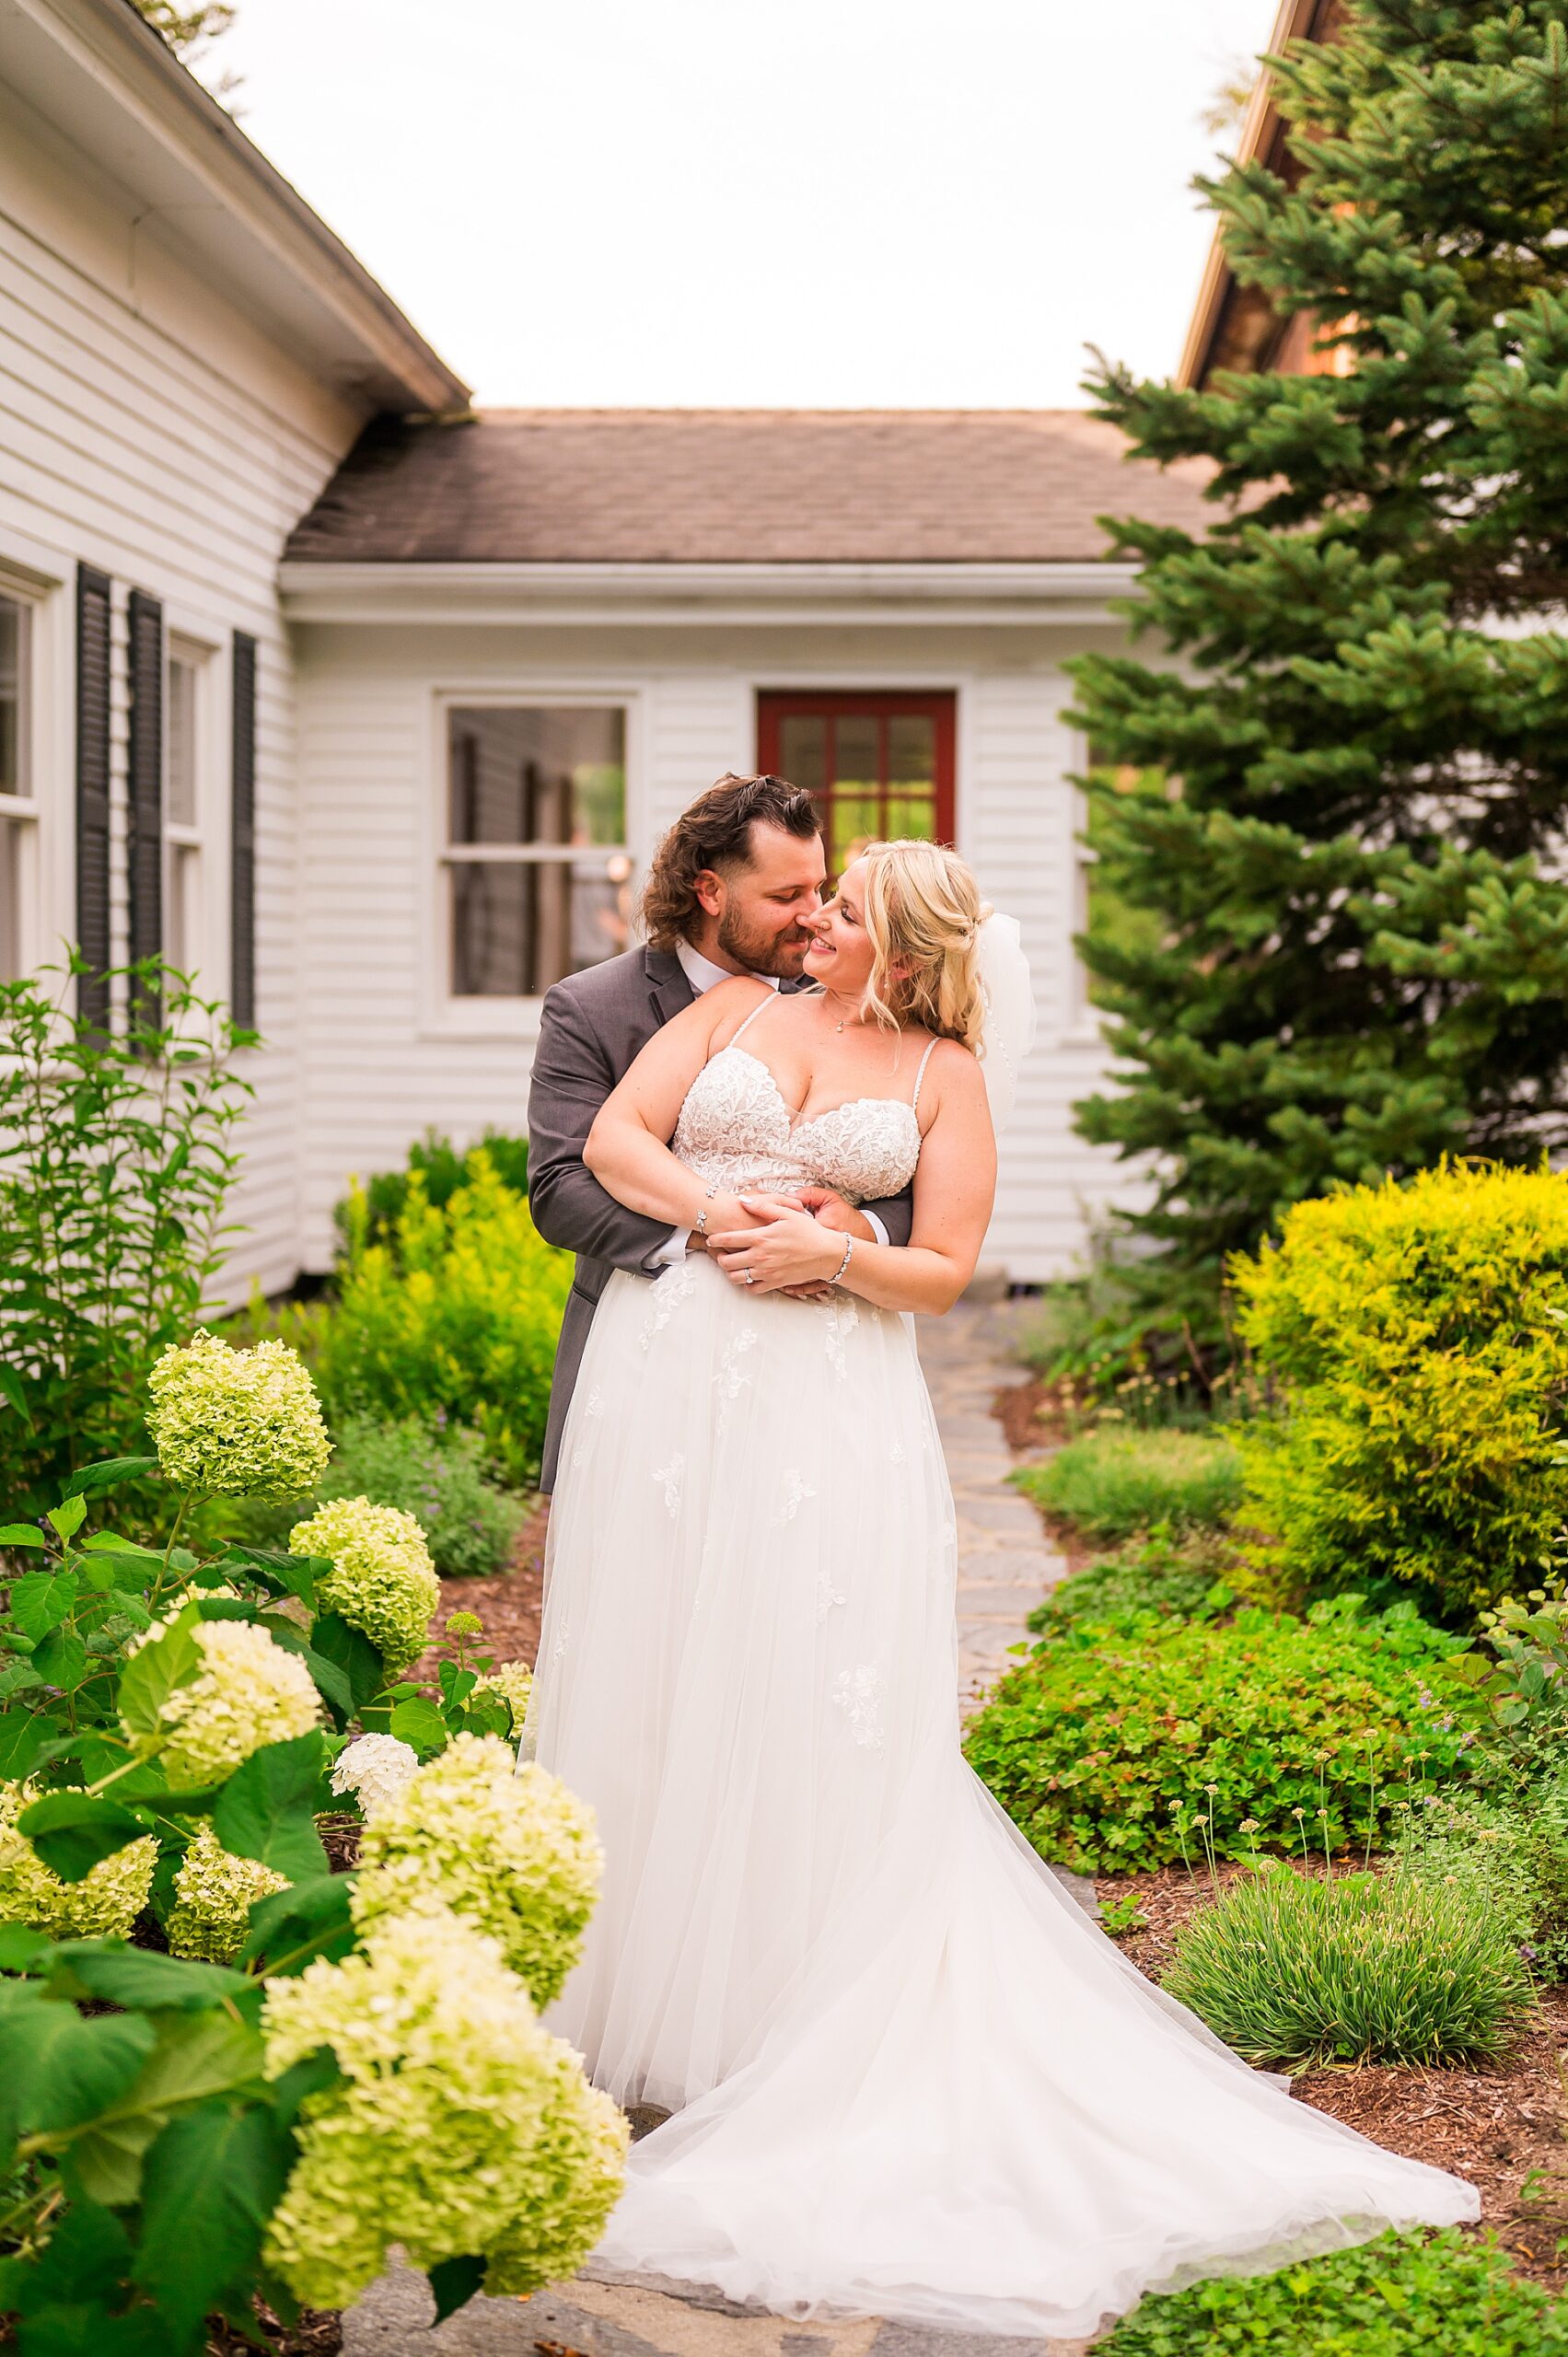 Allrose Farm Wedding portraits captured by New Hampshire Wedding photographer Allison Clarke Photography